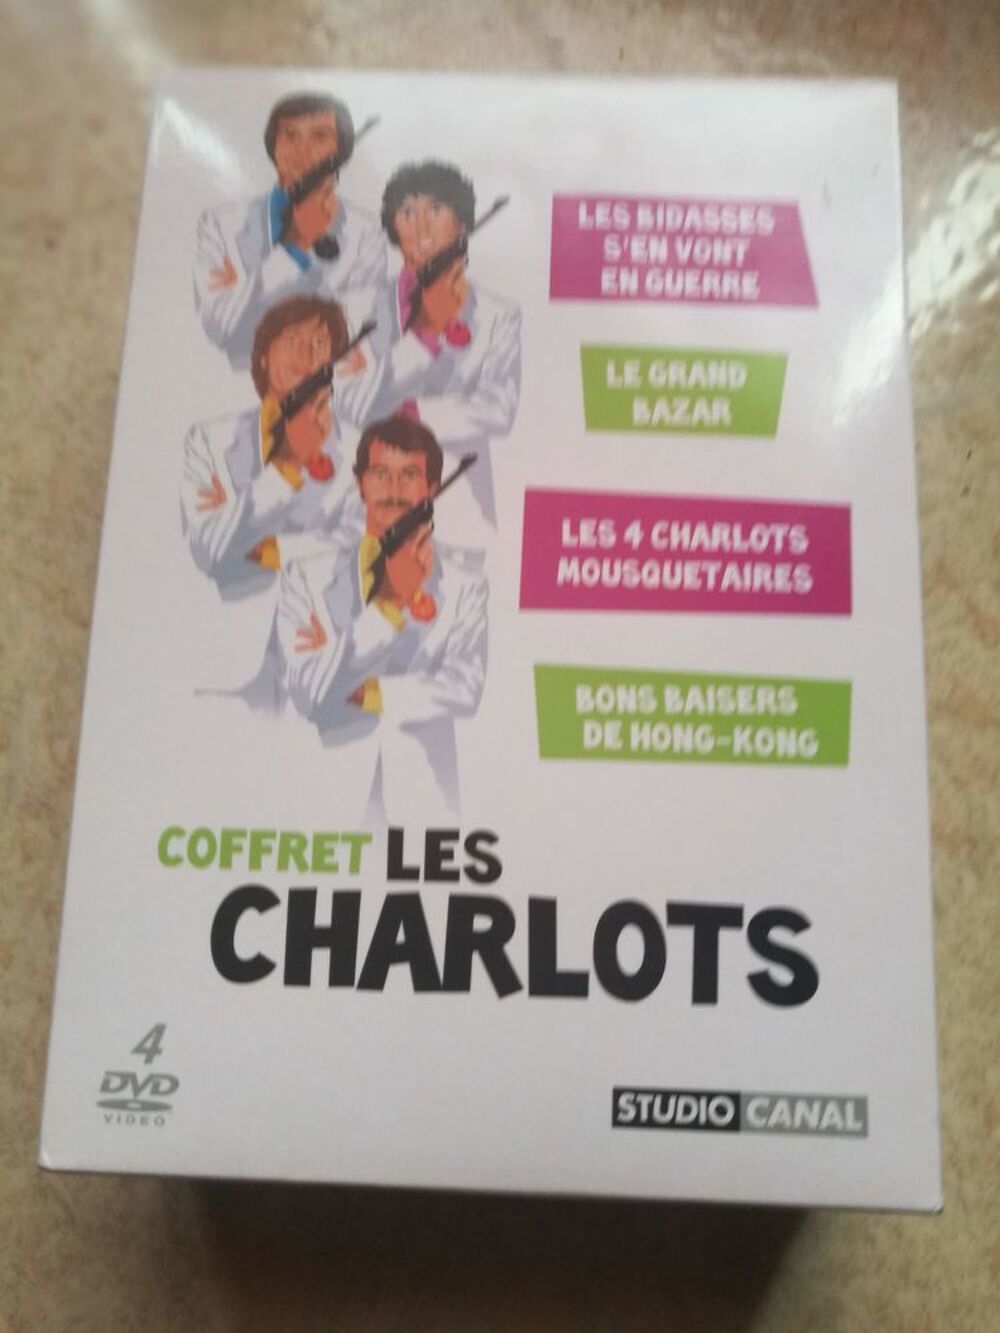 Coffret DVD les Charlots - 4 FIlms DVD et blu-ray